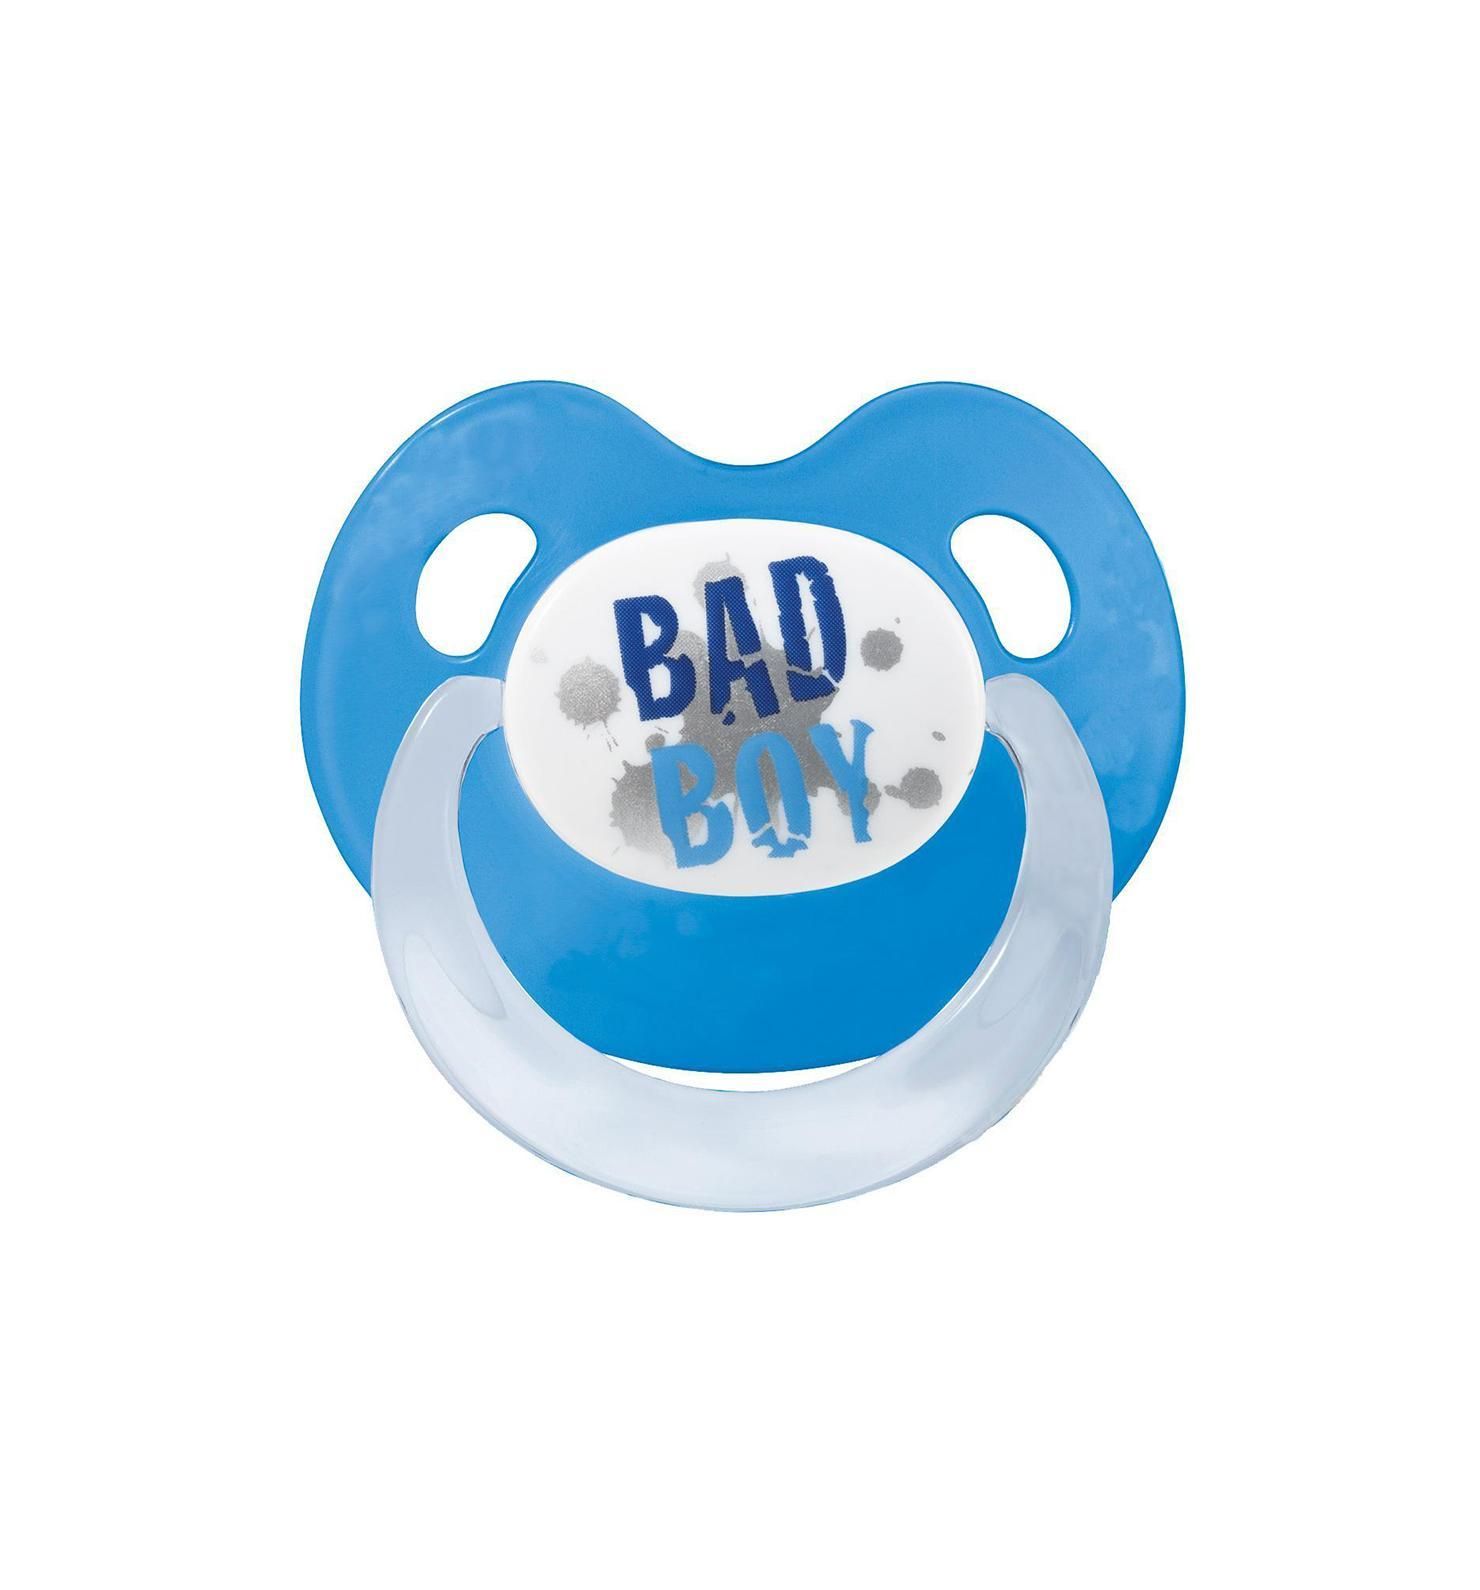  Bibi Dental   0-6 . BasicCare Drama Queen / Bad Boy